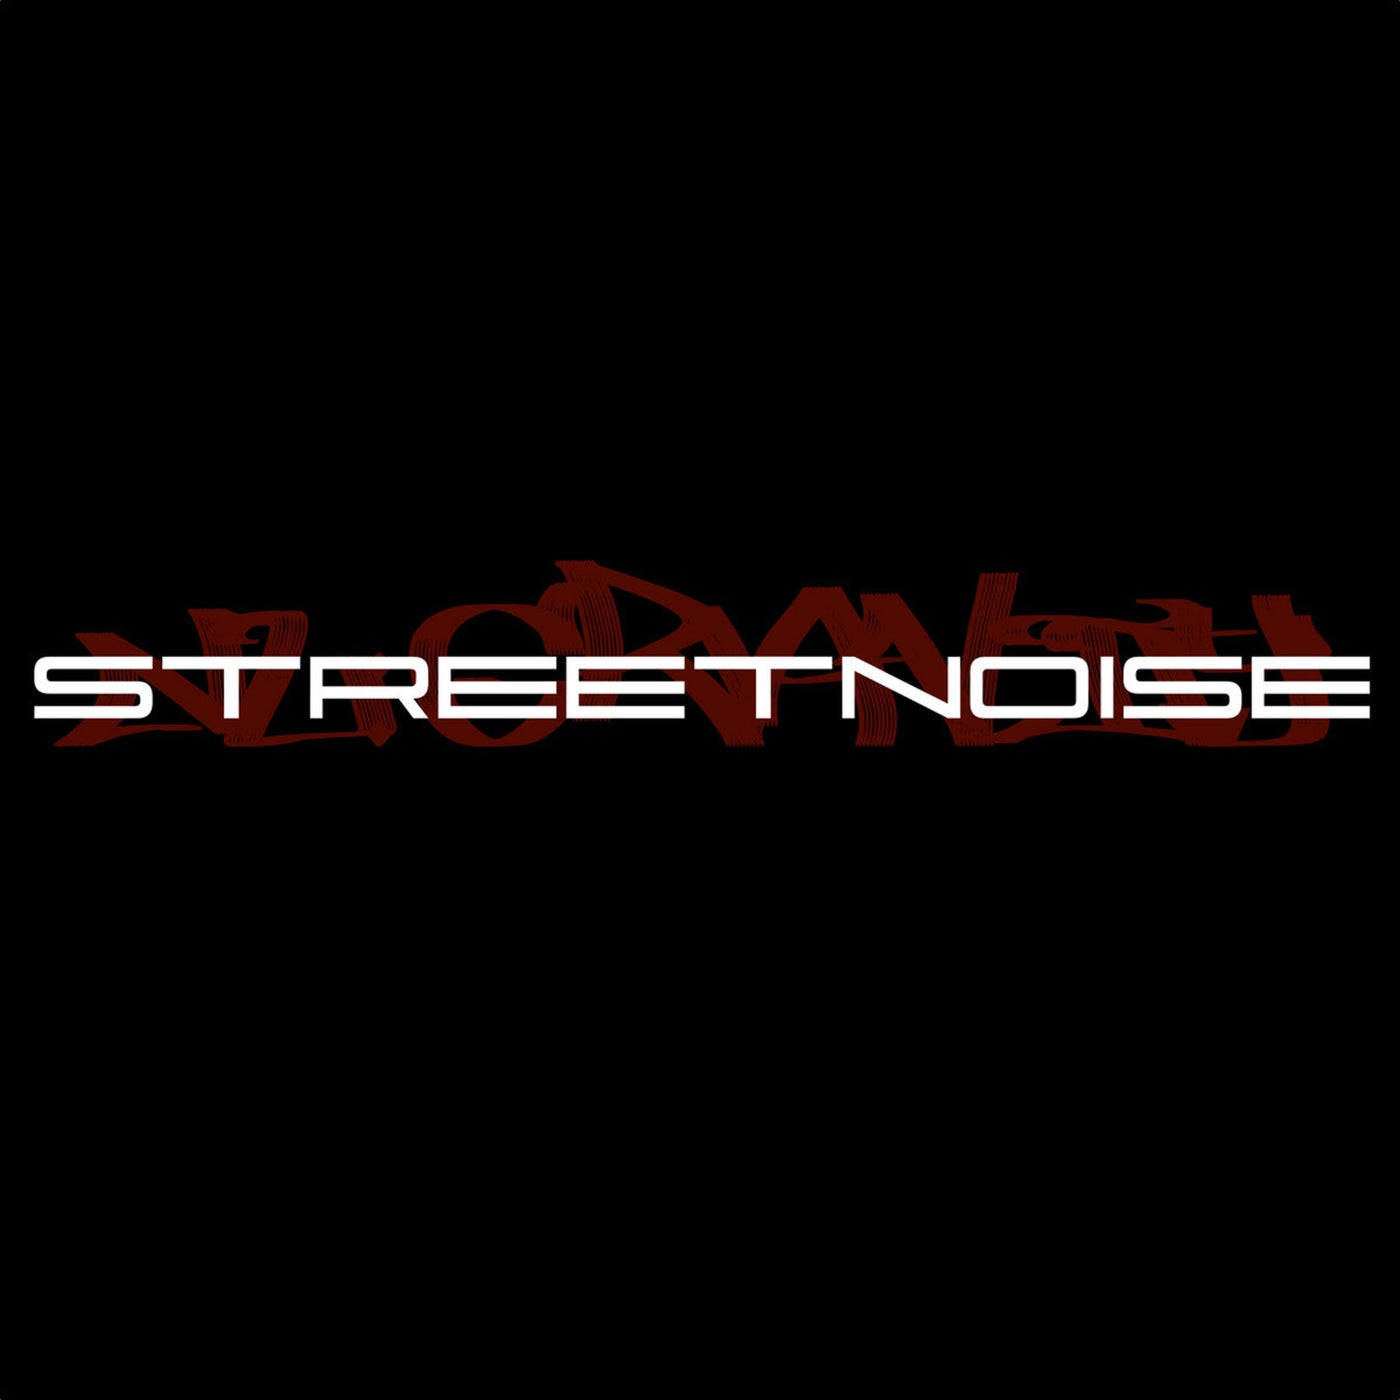 Street Noises